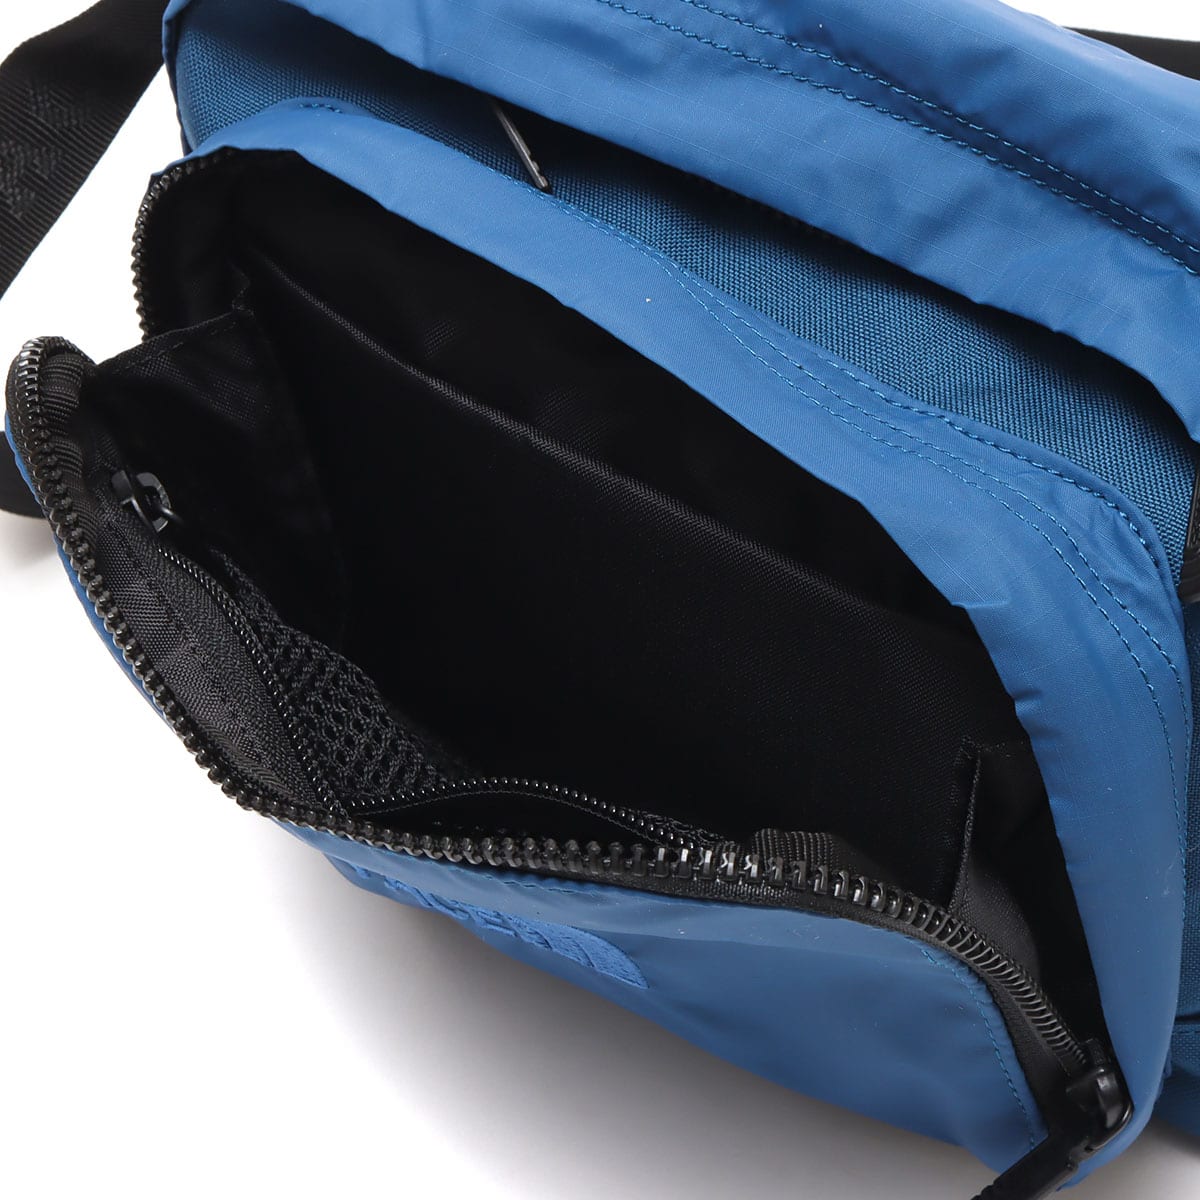 THE NORTH FACE PURPLE LABEL CORDURA Nylon Shoulder Bag TEAL Blue 